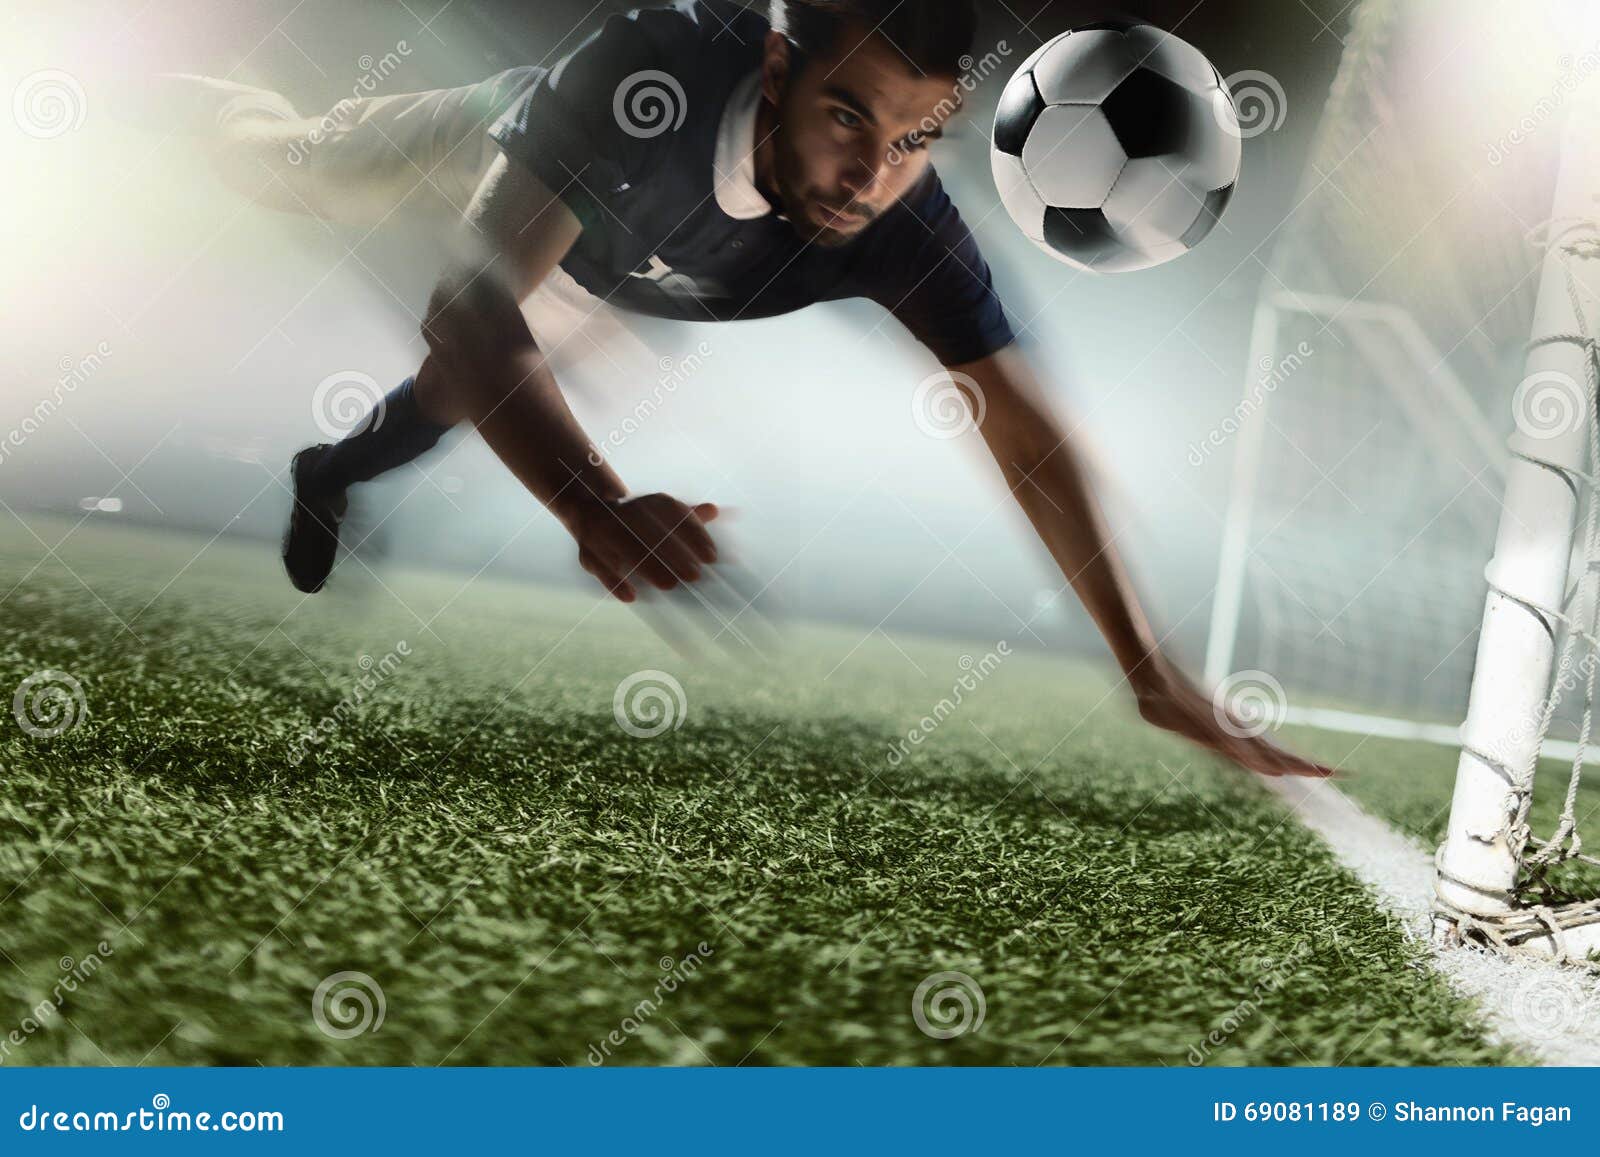 soccer player heading a soccer ball